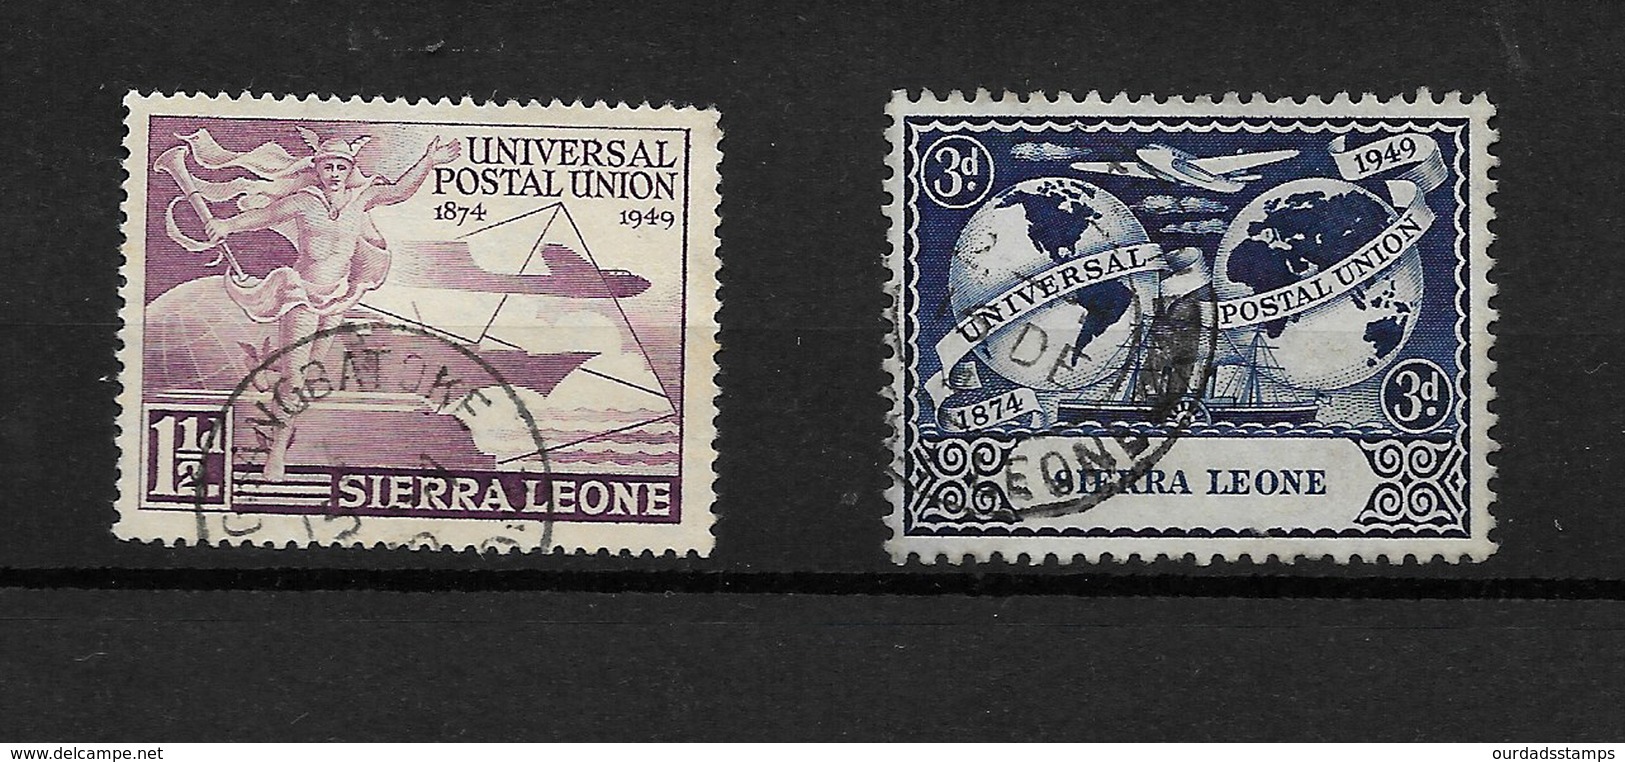 Sierra Leone, KGVI 1949 UPU Anniversary, Complete Set Used (7387) - Sierra Leone (...-1960)